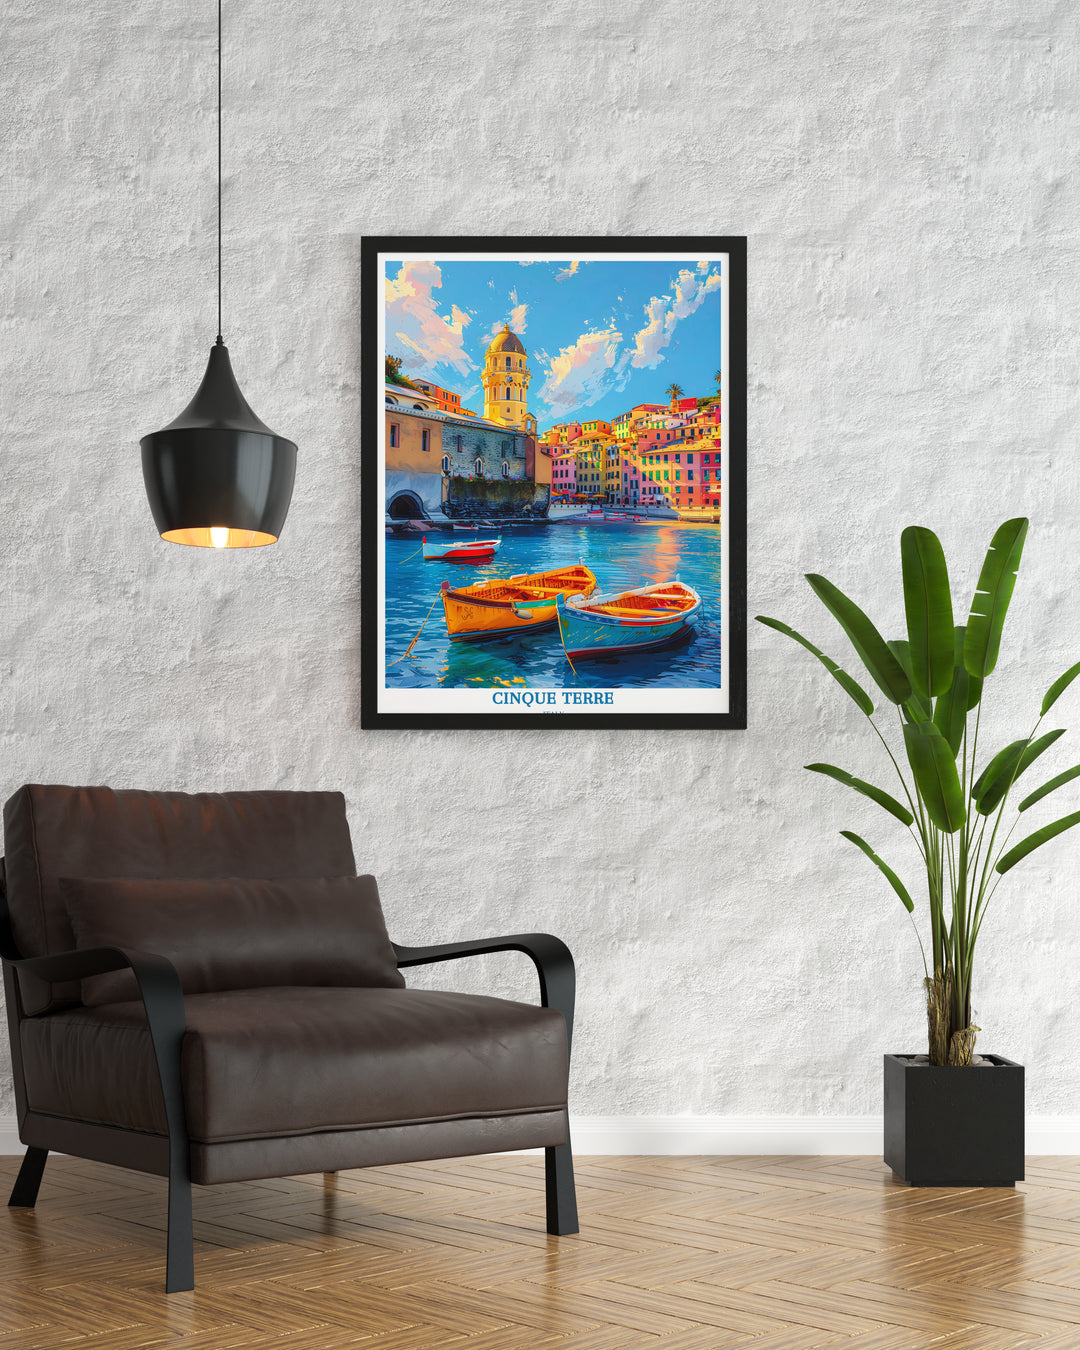 Cinque Terre Elegance - Stunning Travel Prints & Vernazza Art for Home Decor